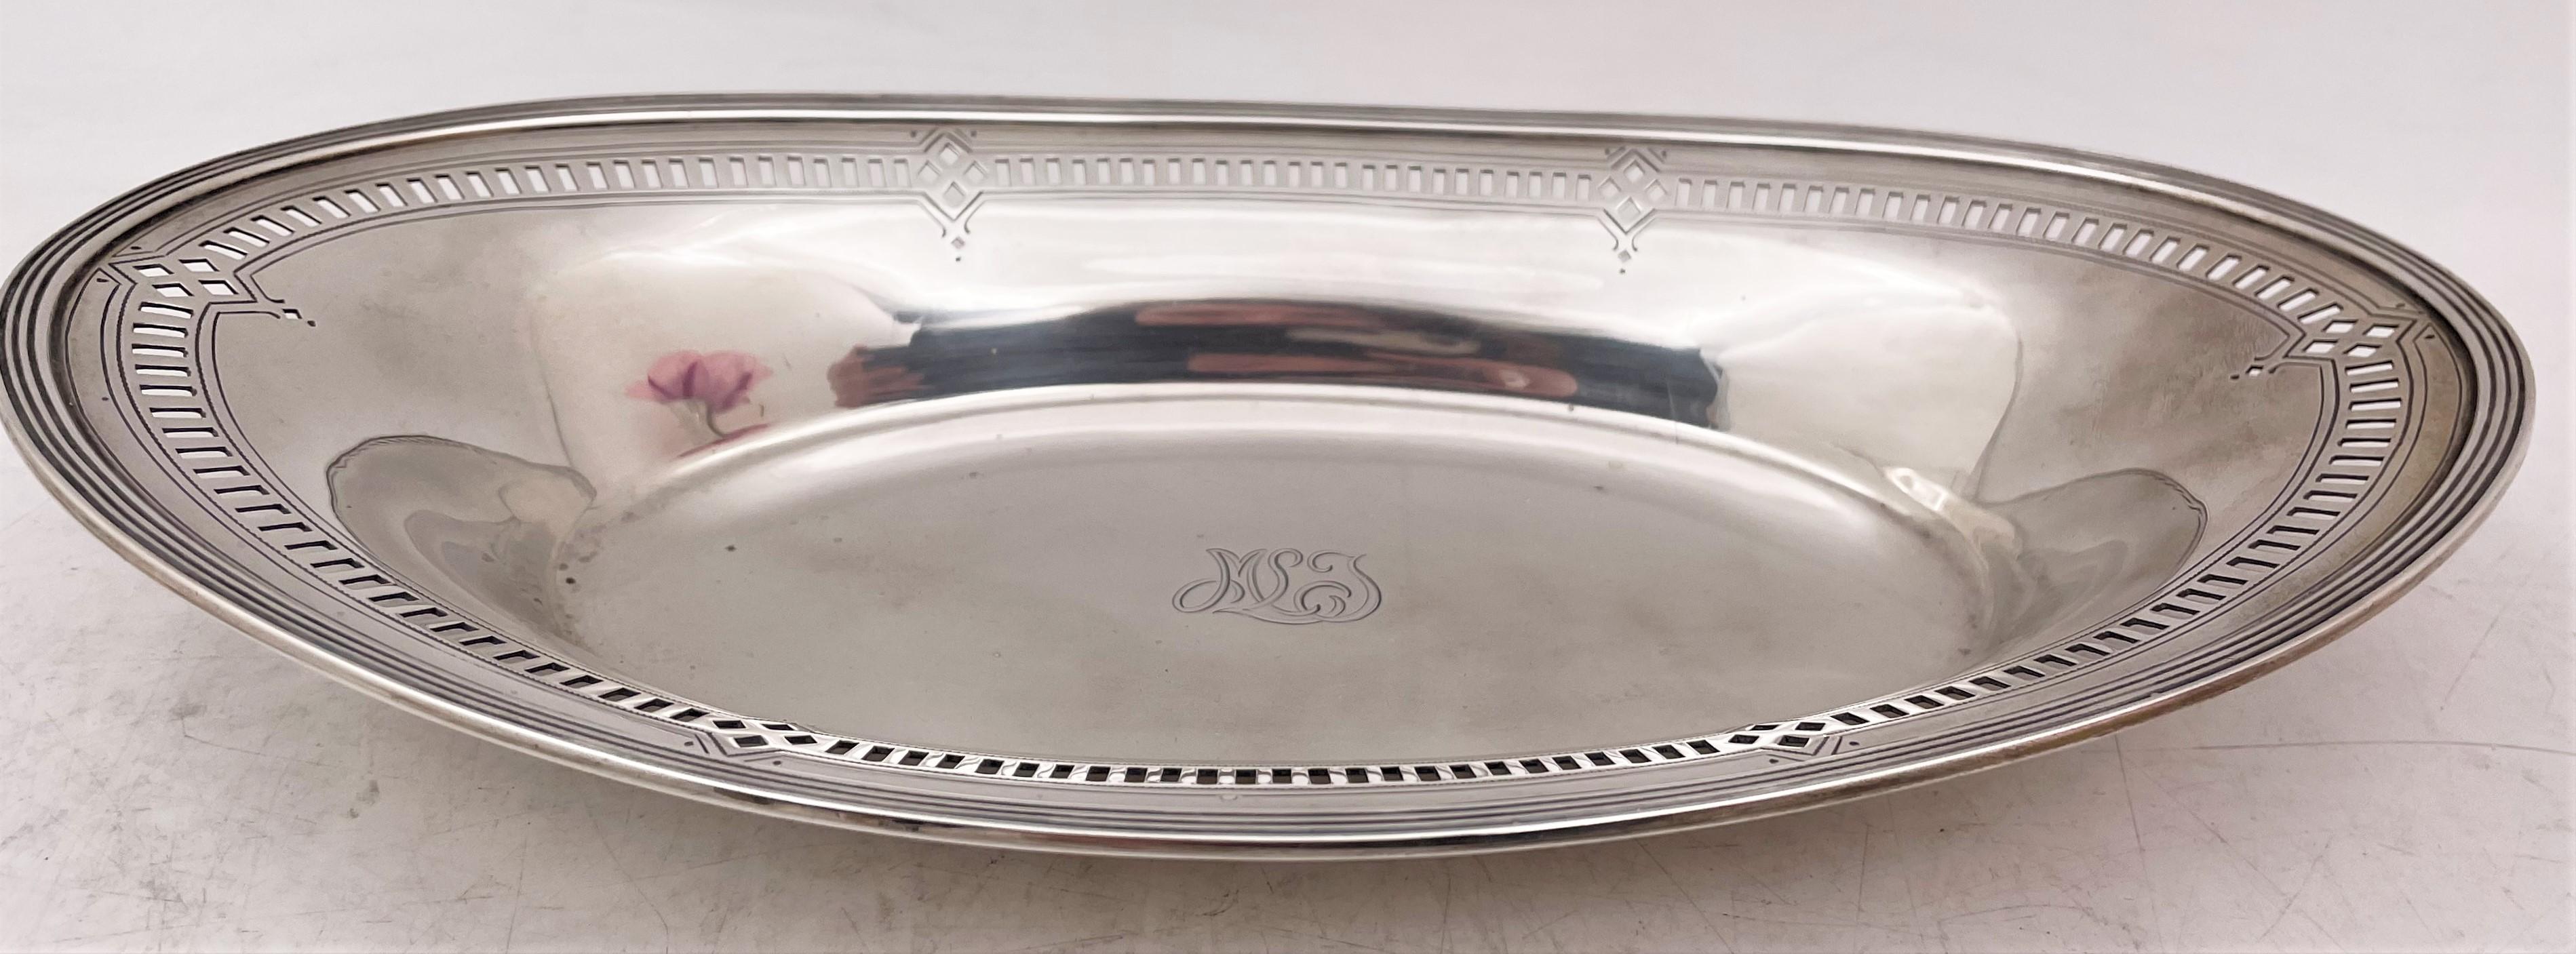 American Tiffany & Co. Sterling Silver 1910 Pierced Bread Dish in Art Deco Style For Sale